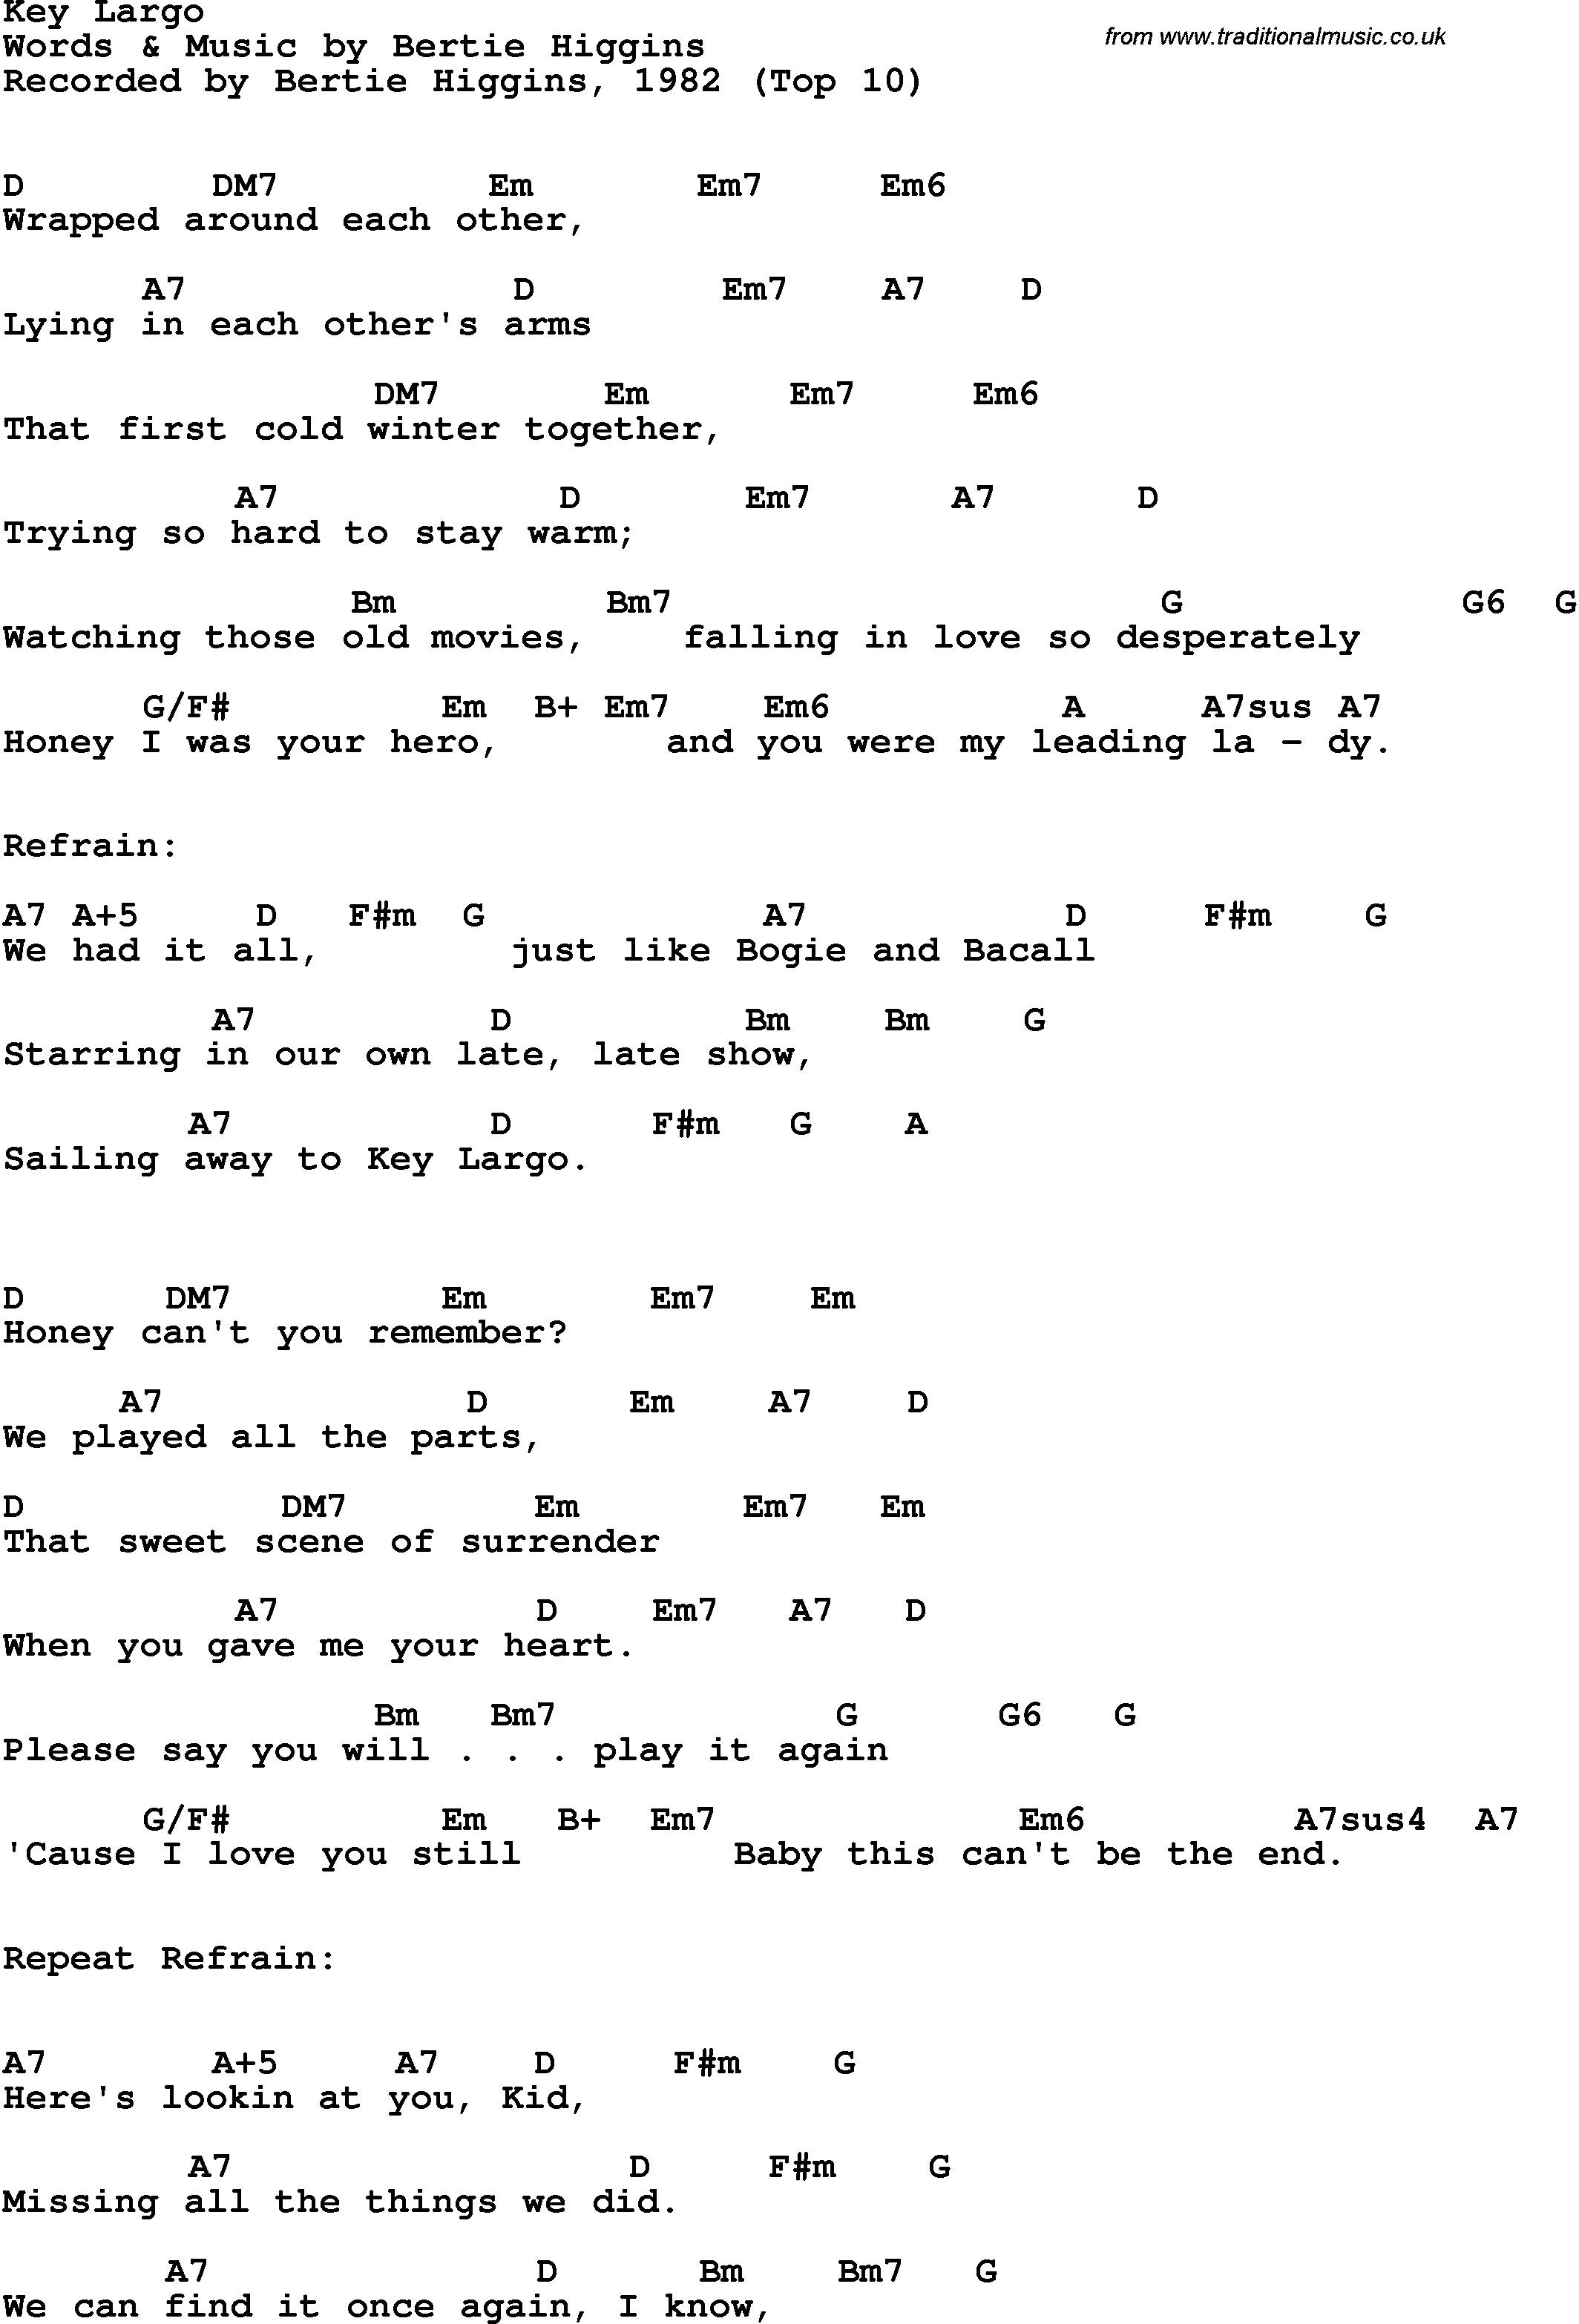 Song Lyrics with guitar chords for Key Largo - Bertie Higgins, 1982